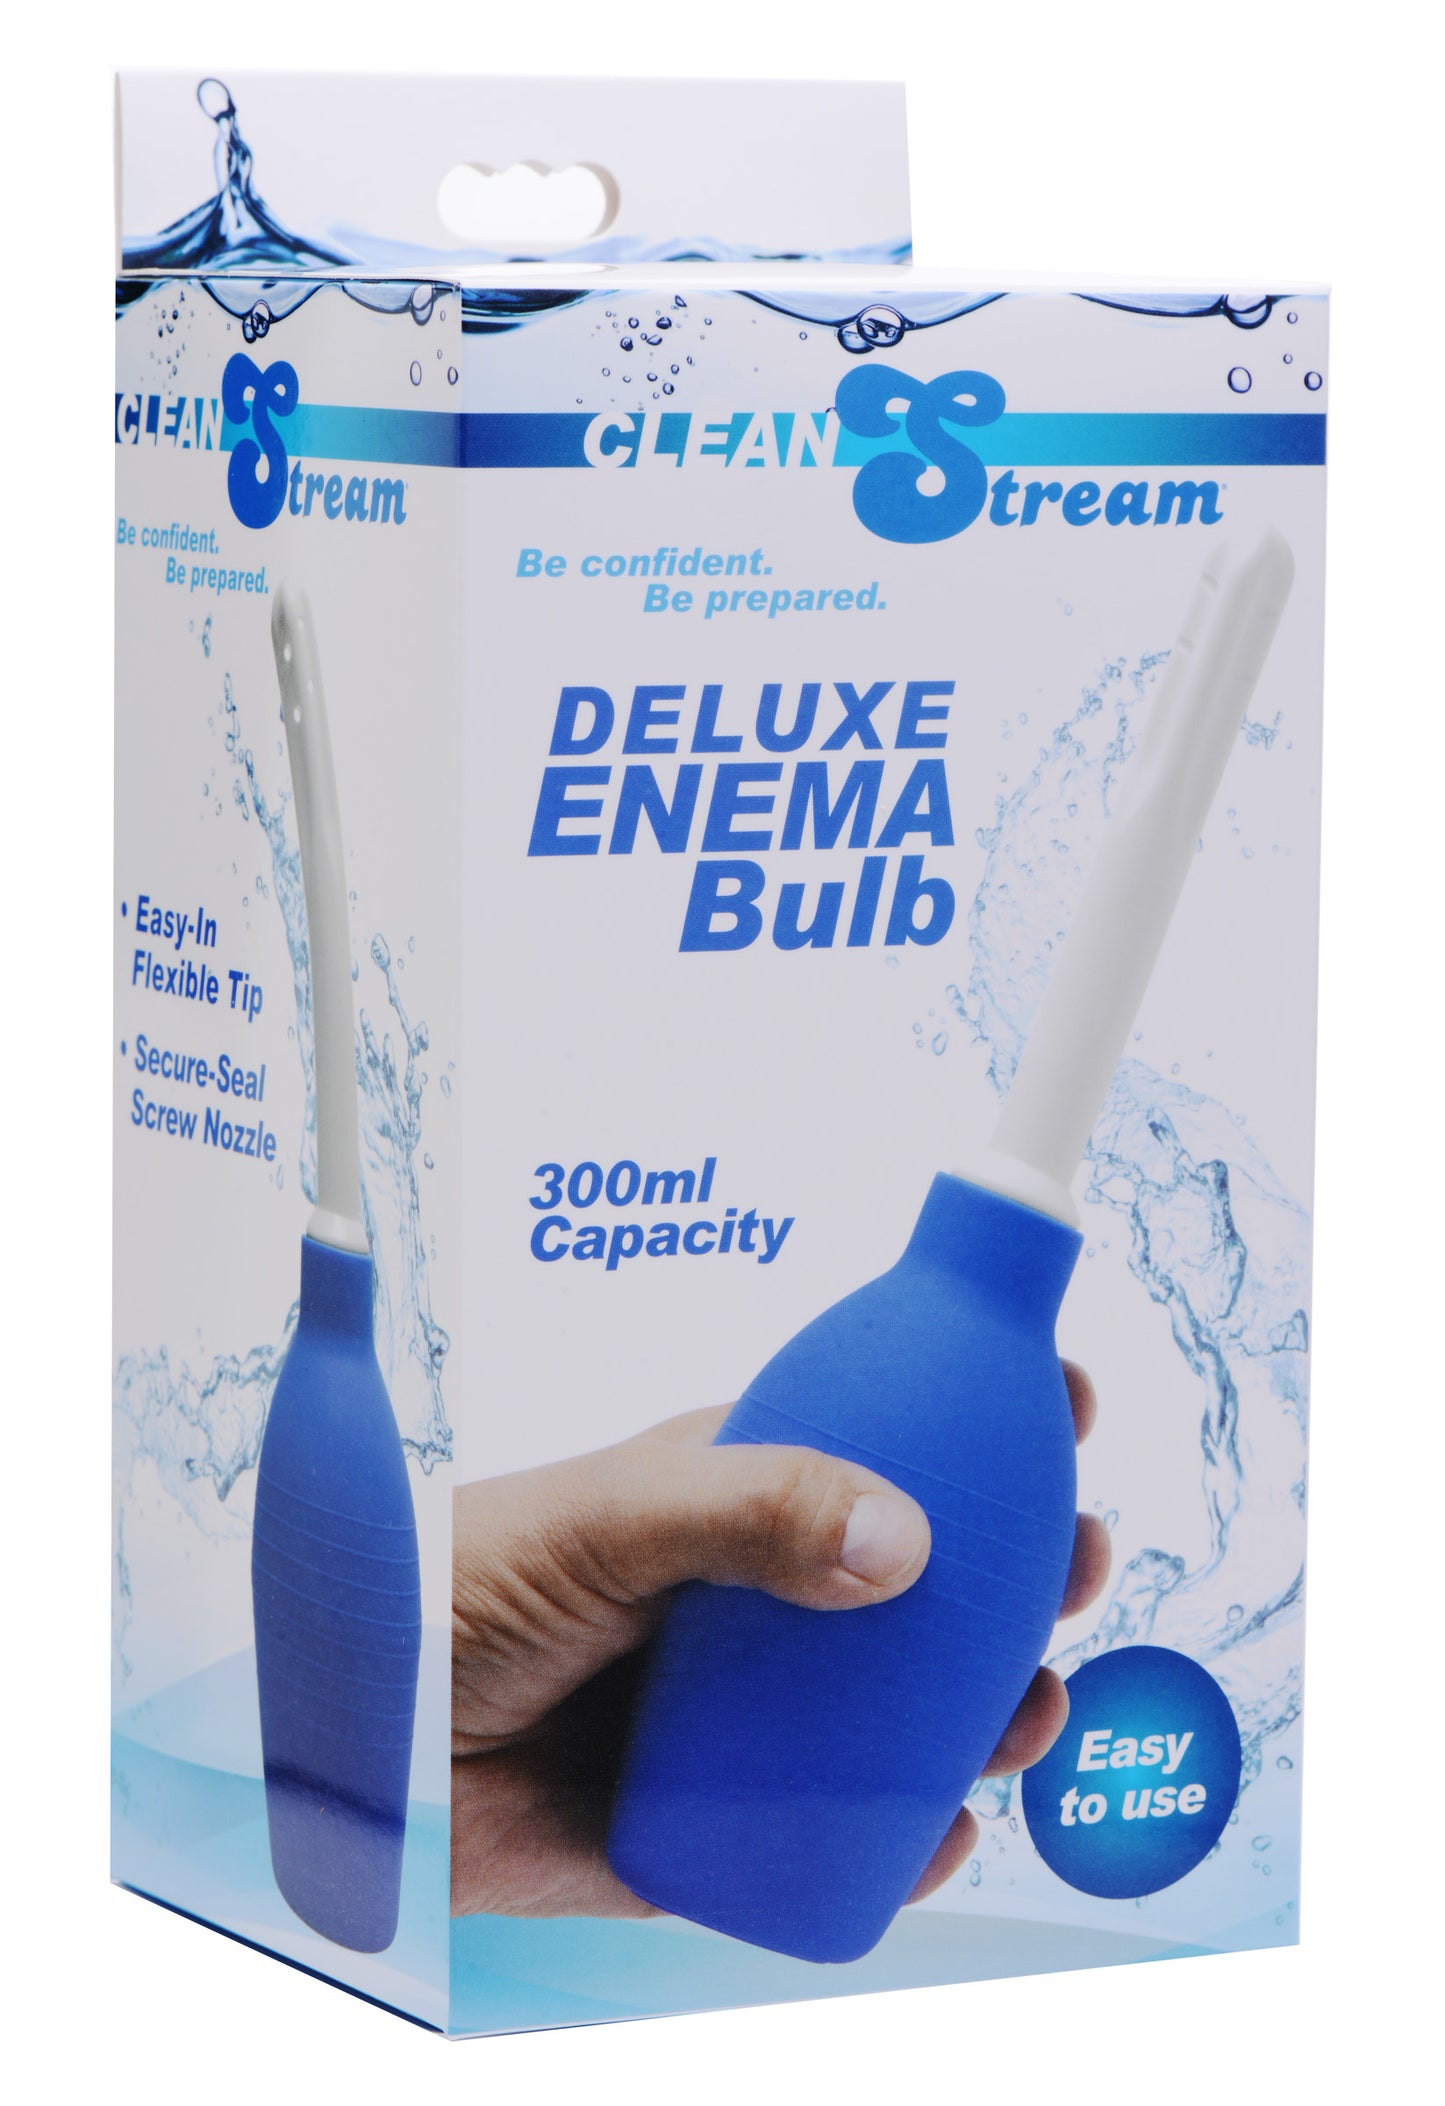 CleanStream Deluxe Enema Bulb